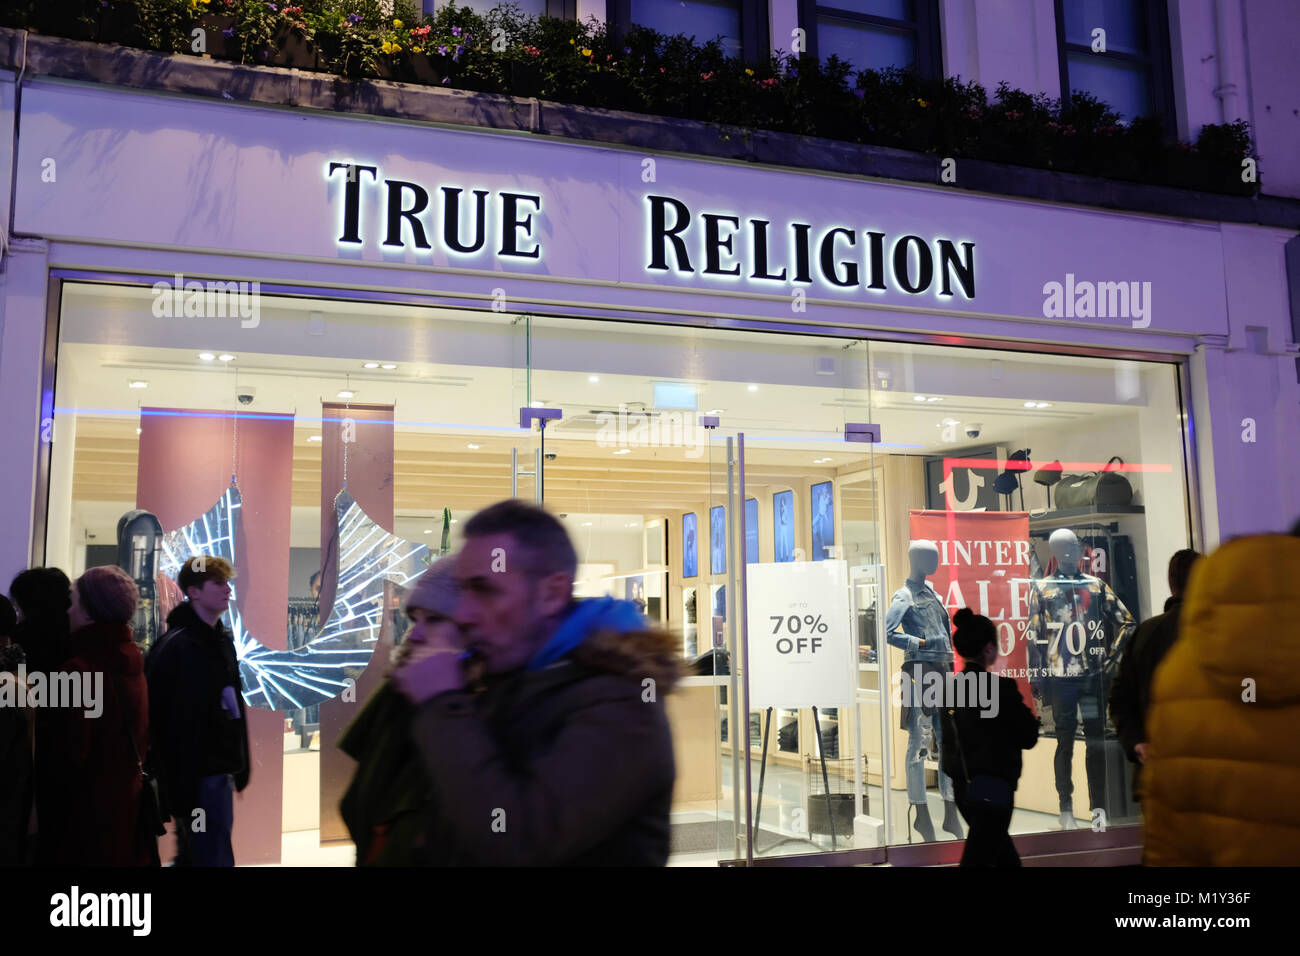 true religion shop london